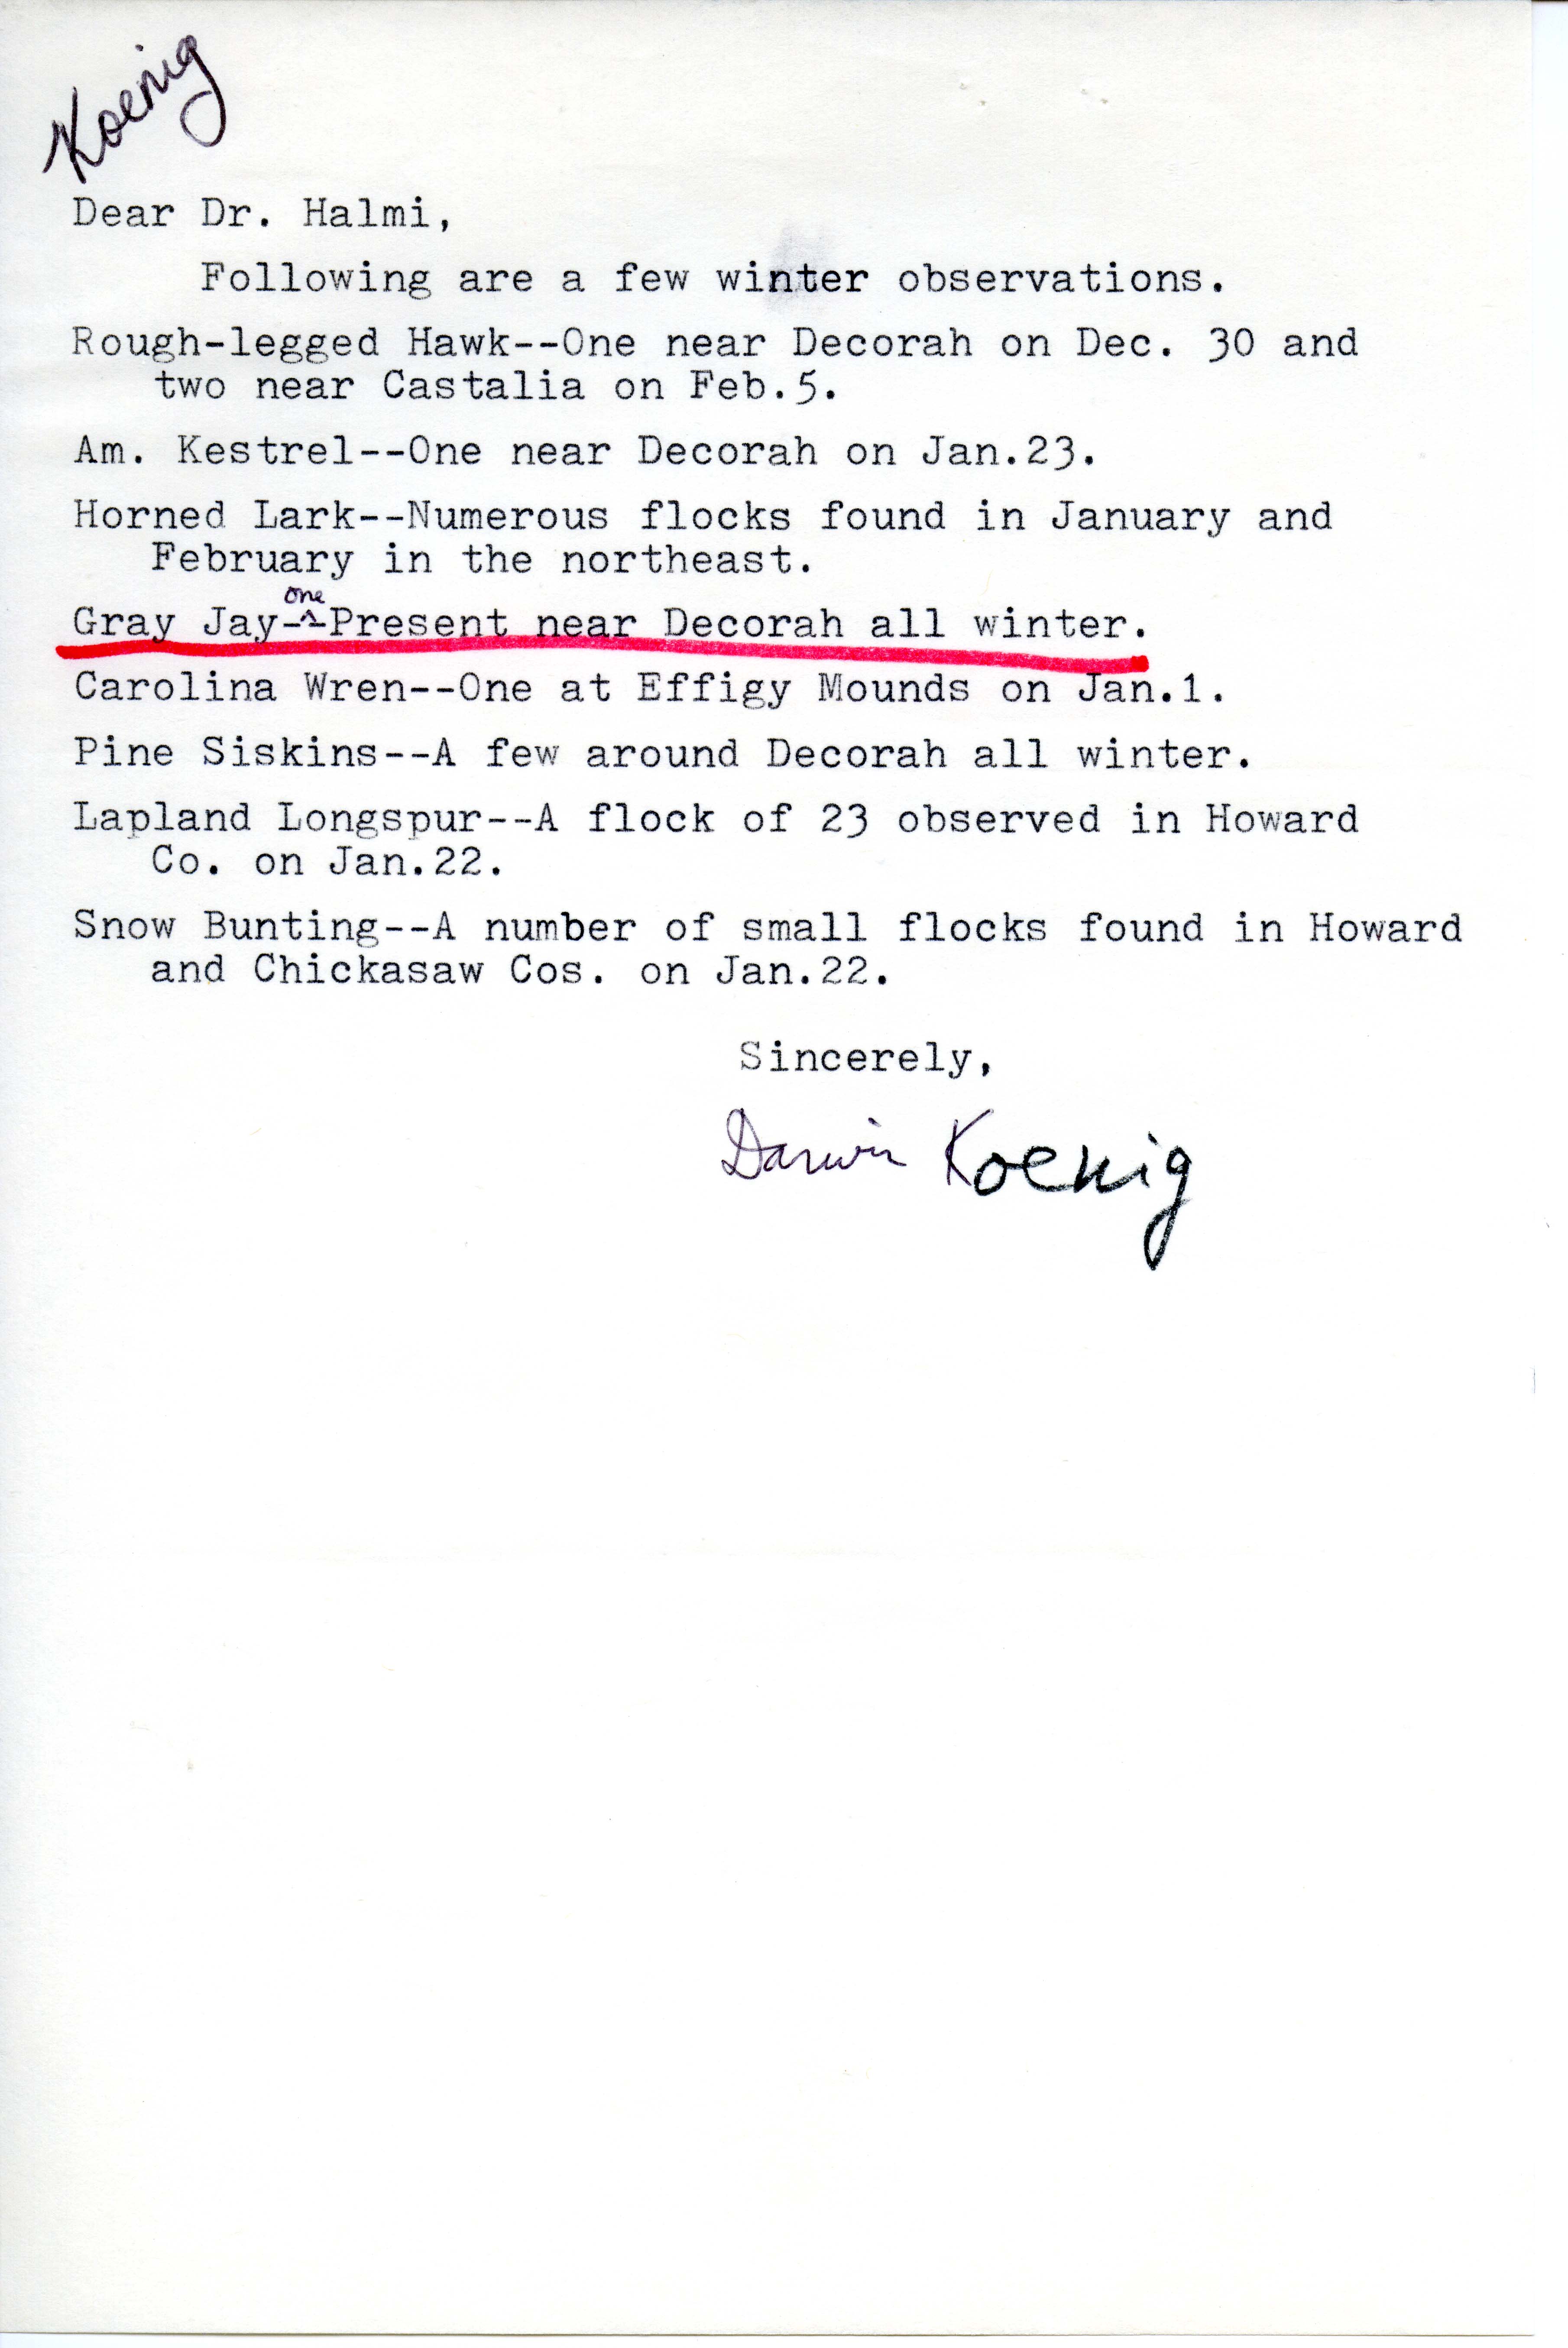 Darwin Koenig letter to Nicholas S. Halmi regarding bird sightings, winter 1976-1977